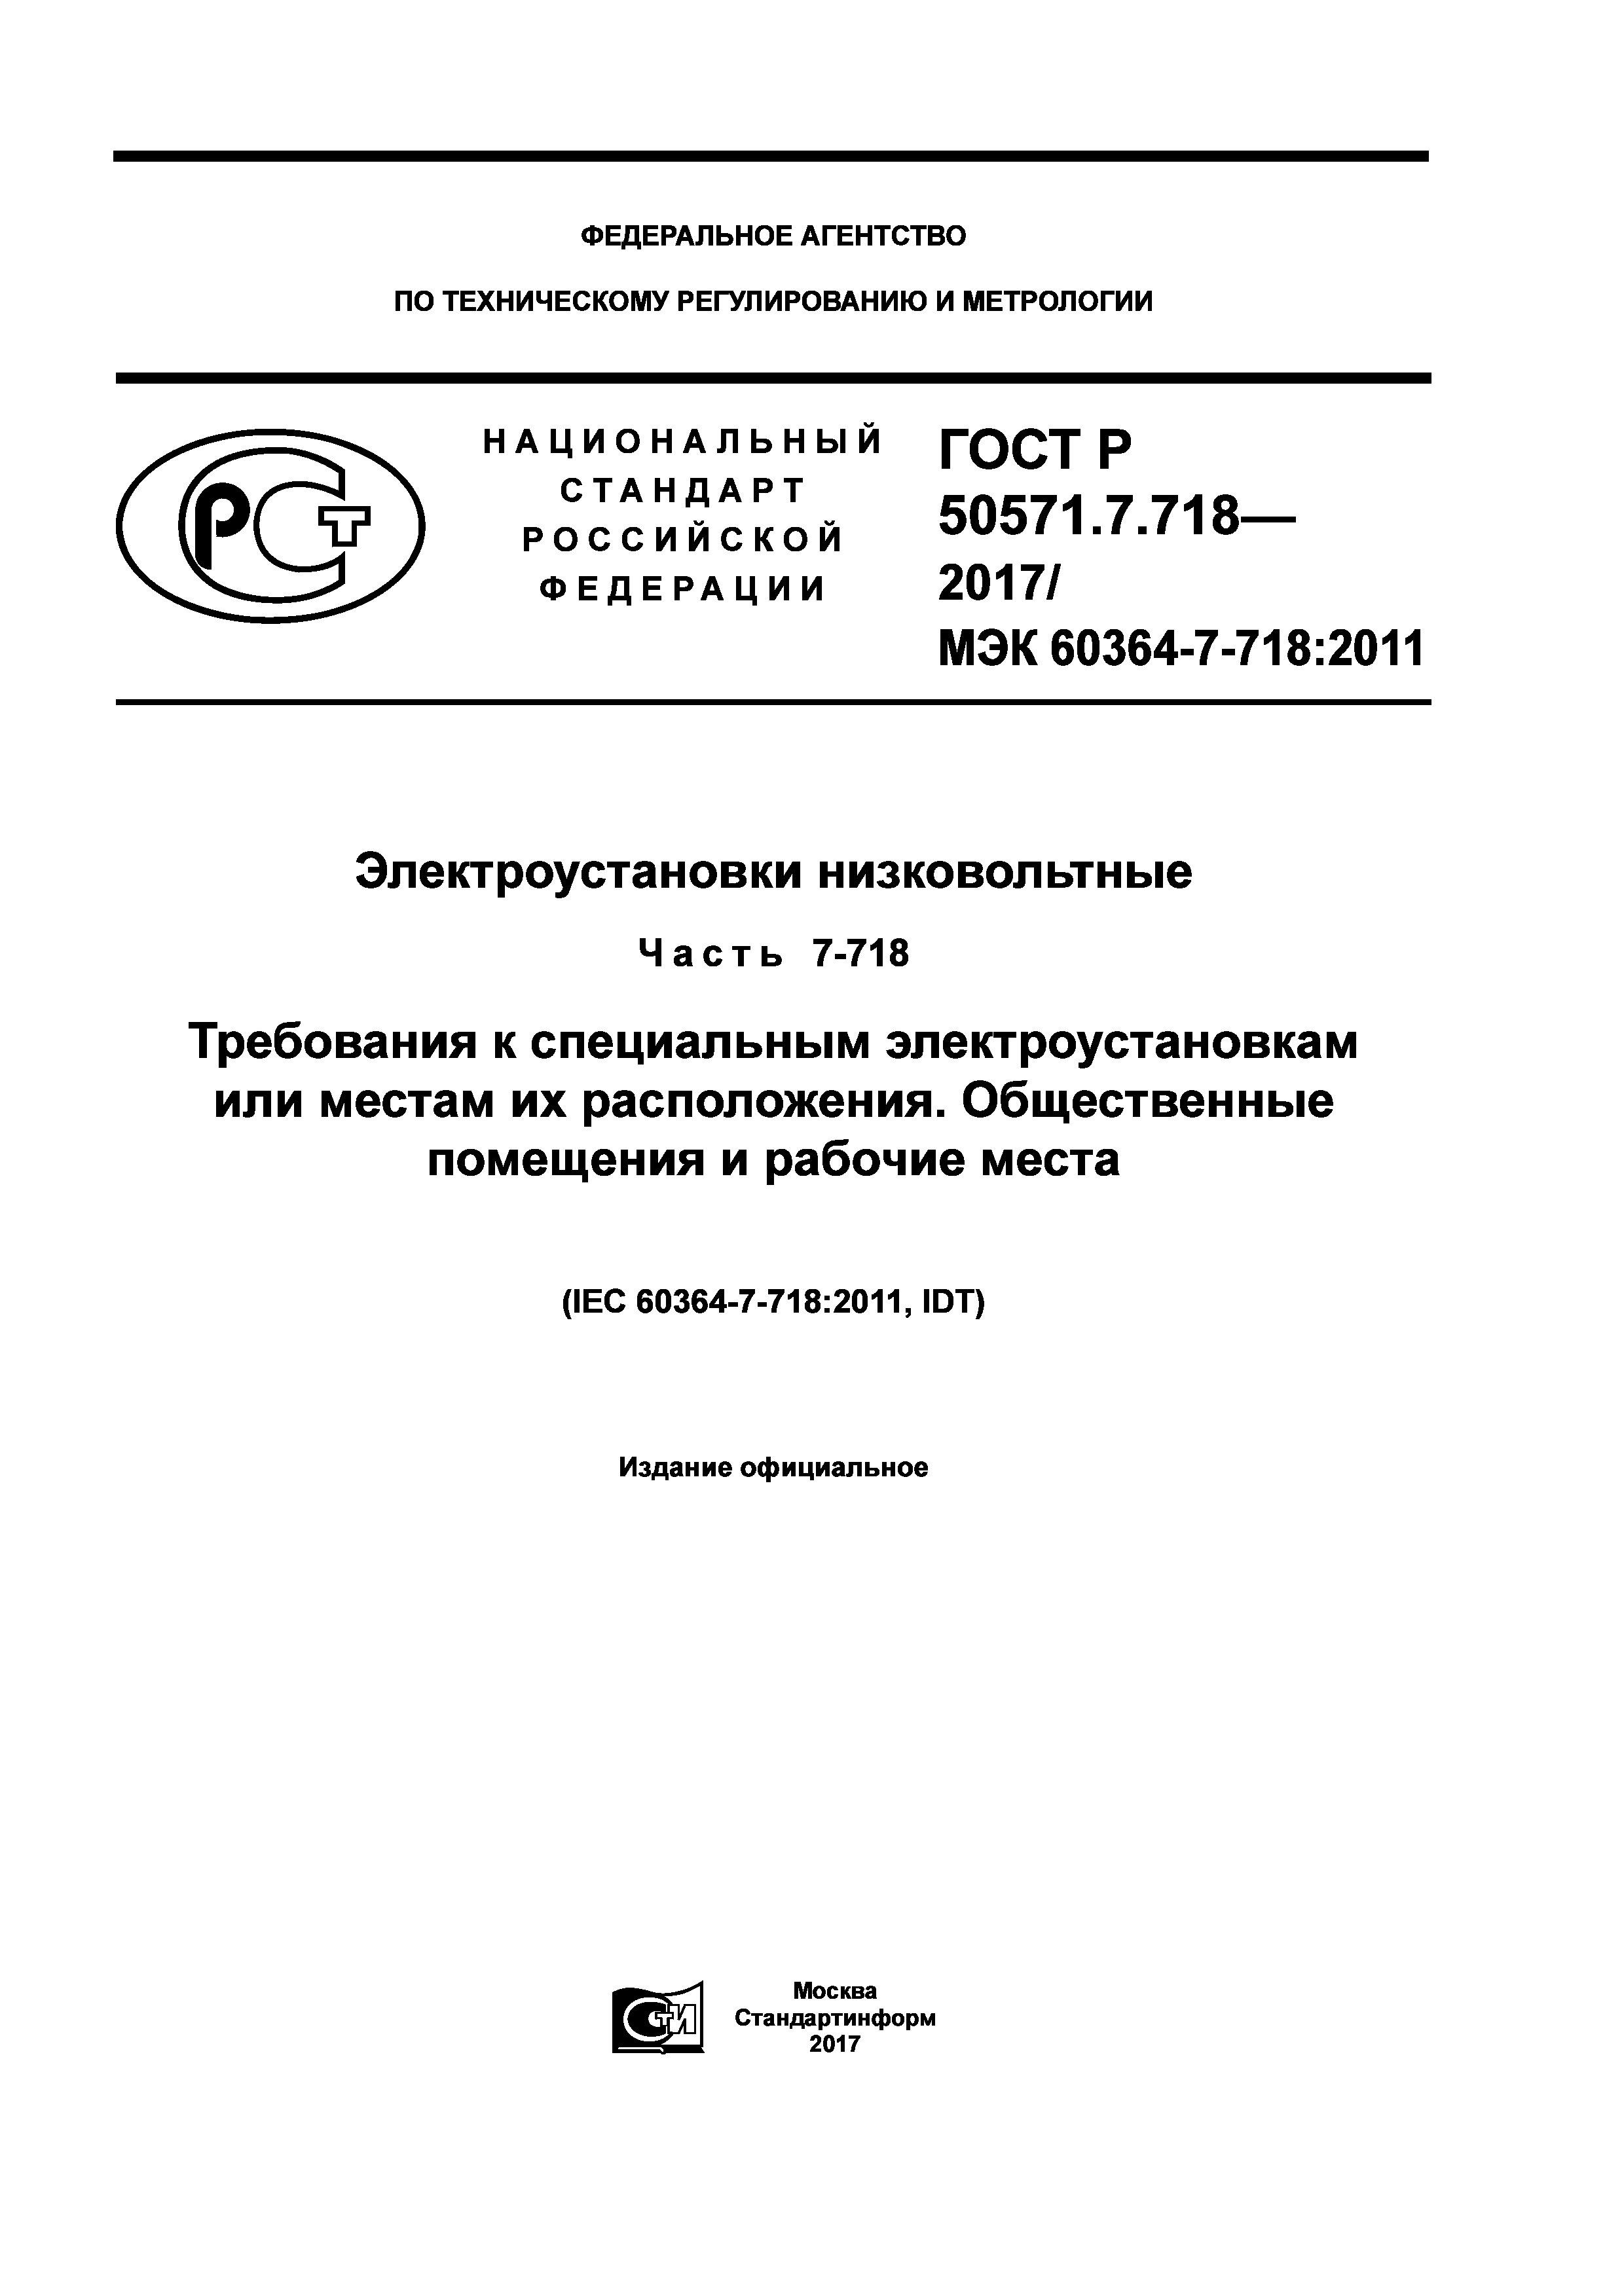 ГОСТ Р 50571.7.718-2017